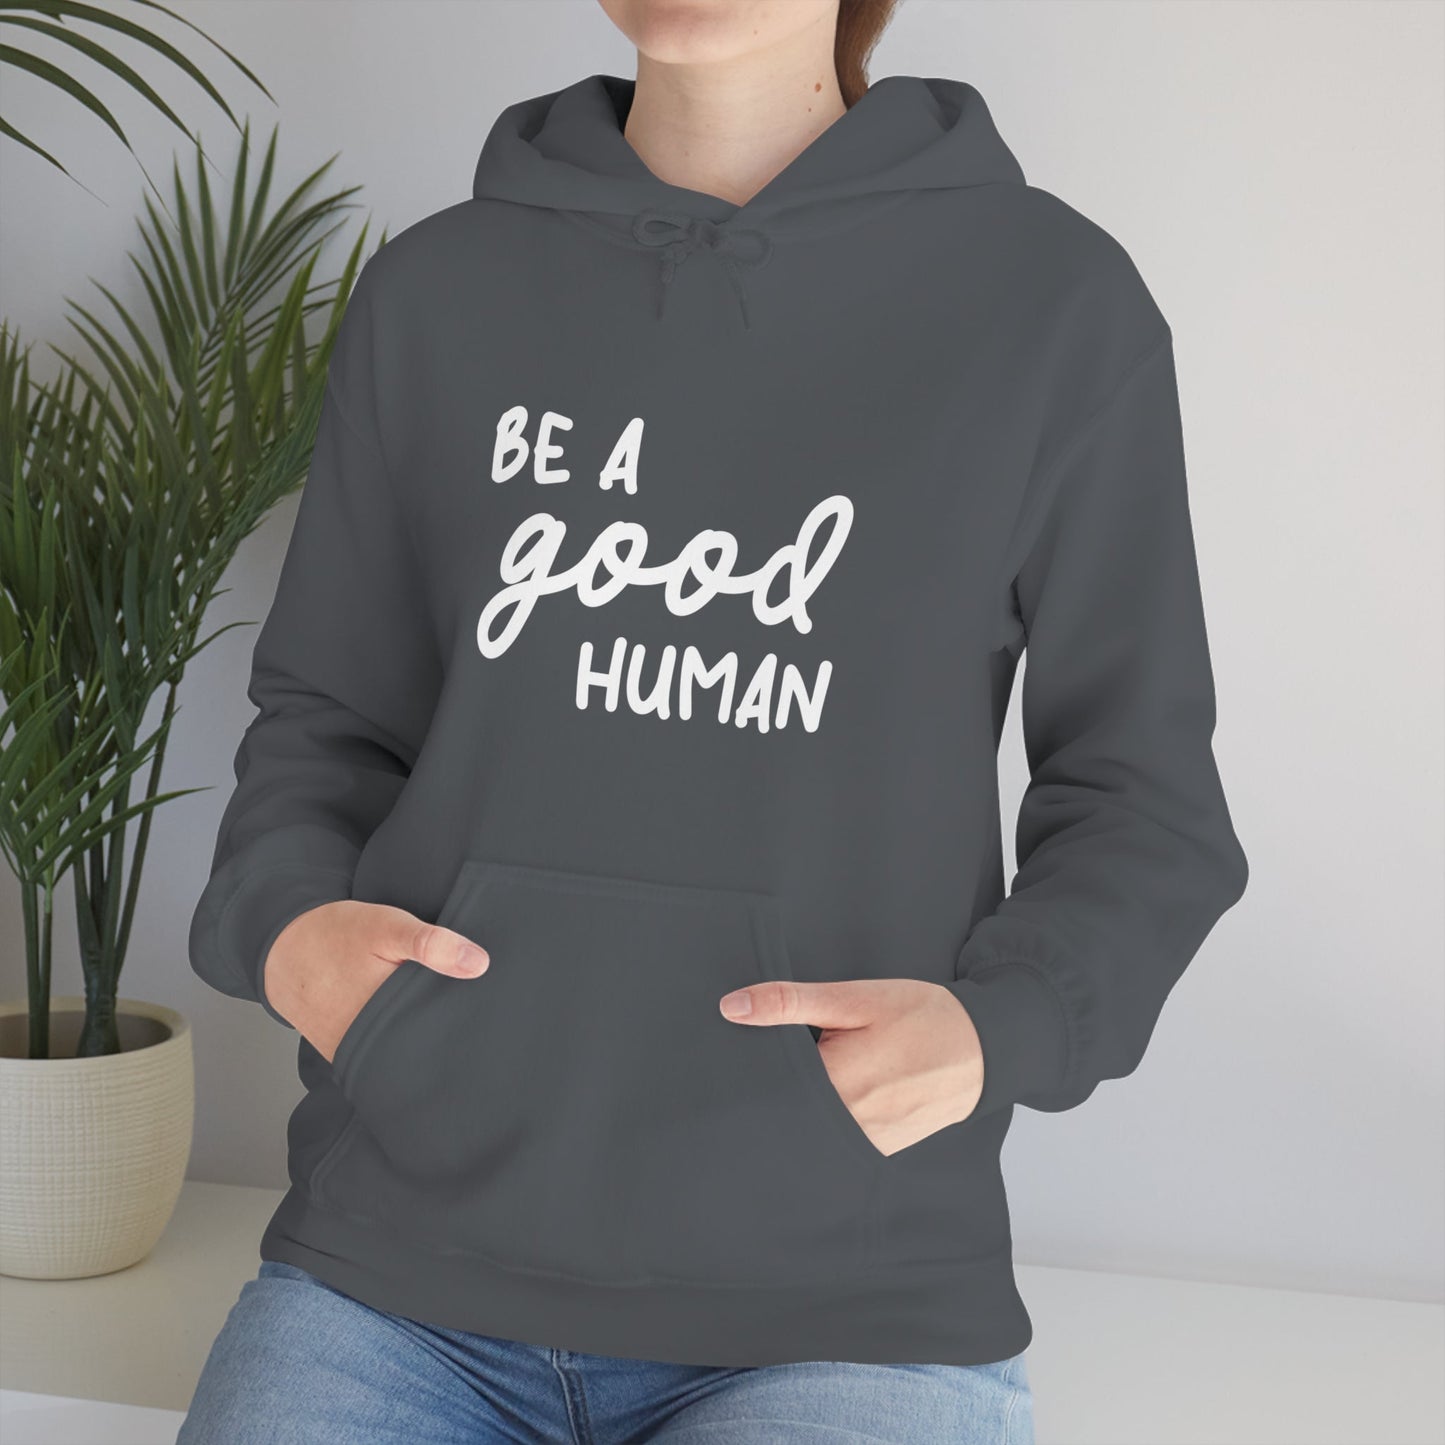 Be A Good Human | Hooded Sweatshirt - Detezi Designs-41310476804728920992